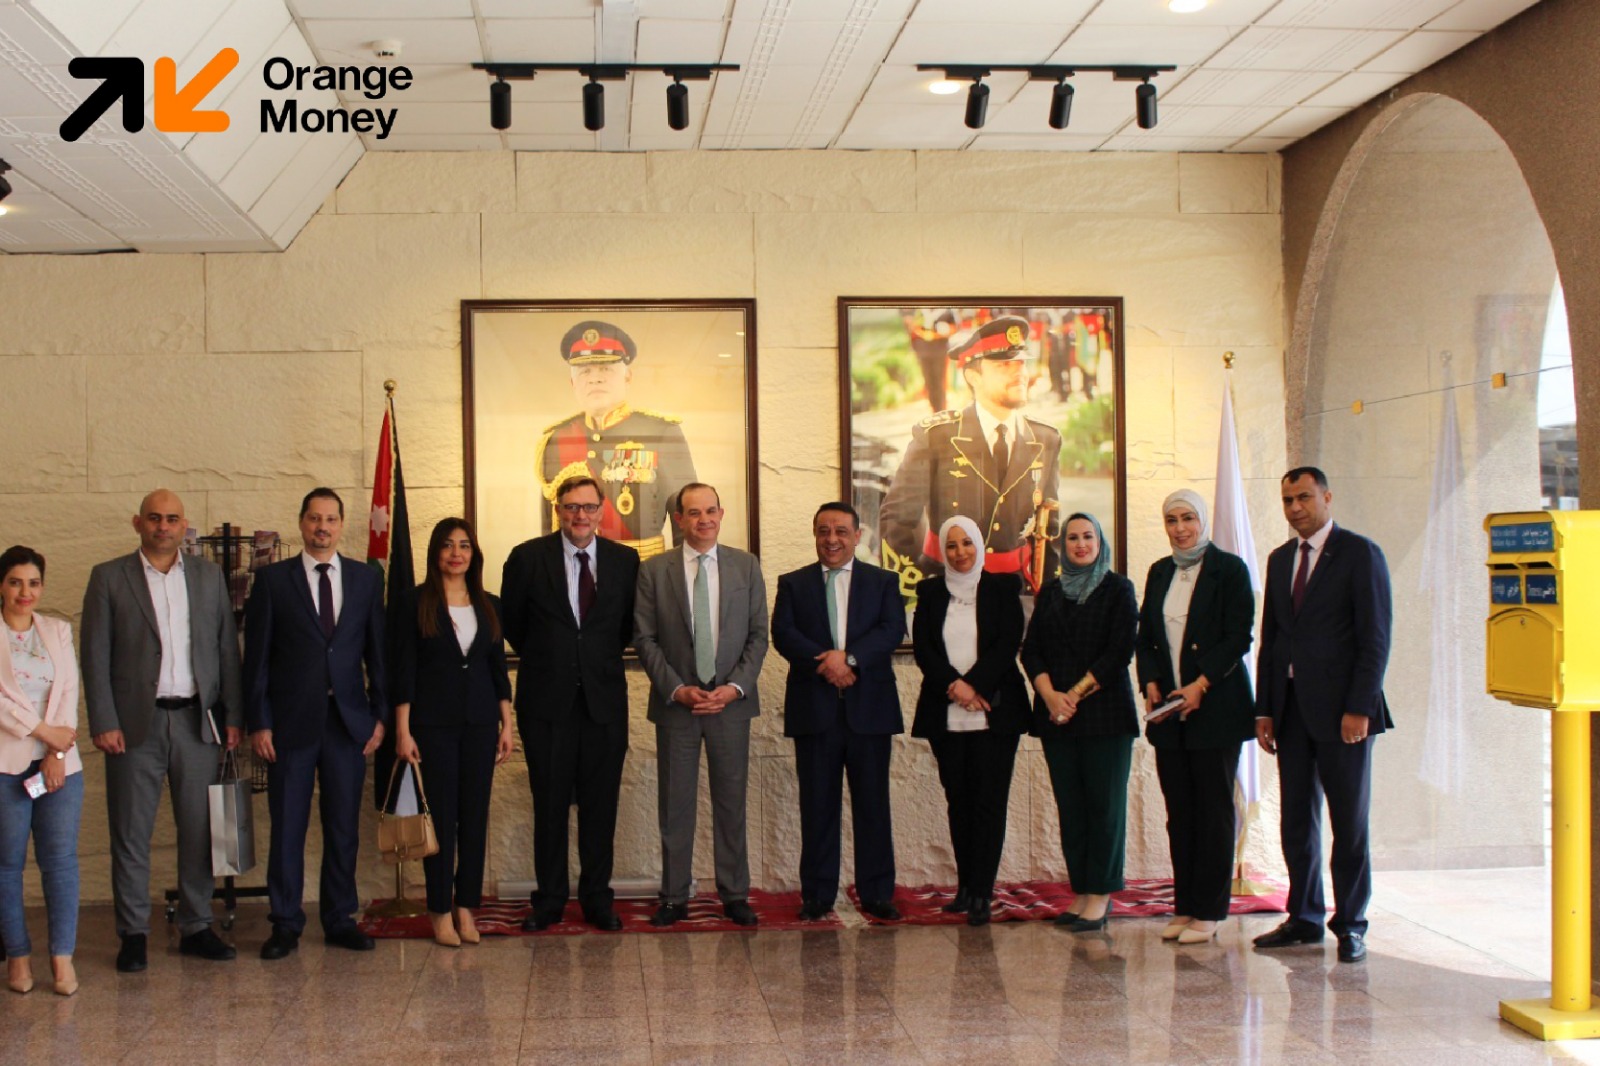  Orange Money والبريد الأردني يبرمان اتفاقية استراتيجية لتطوير الخدمات المالية الرقمية في الأردن